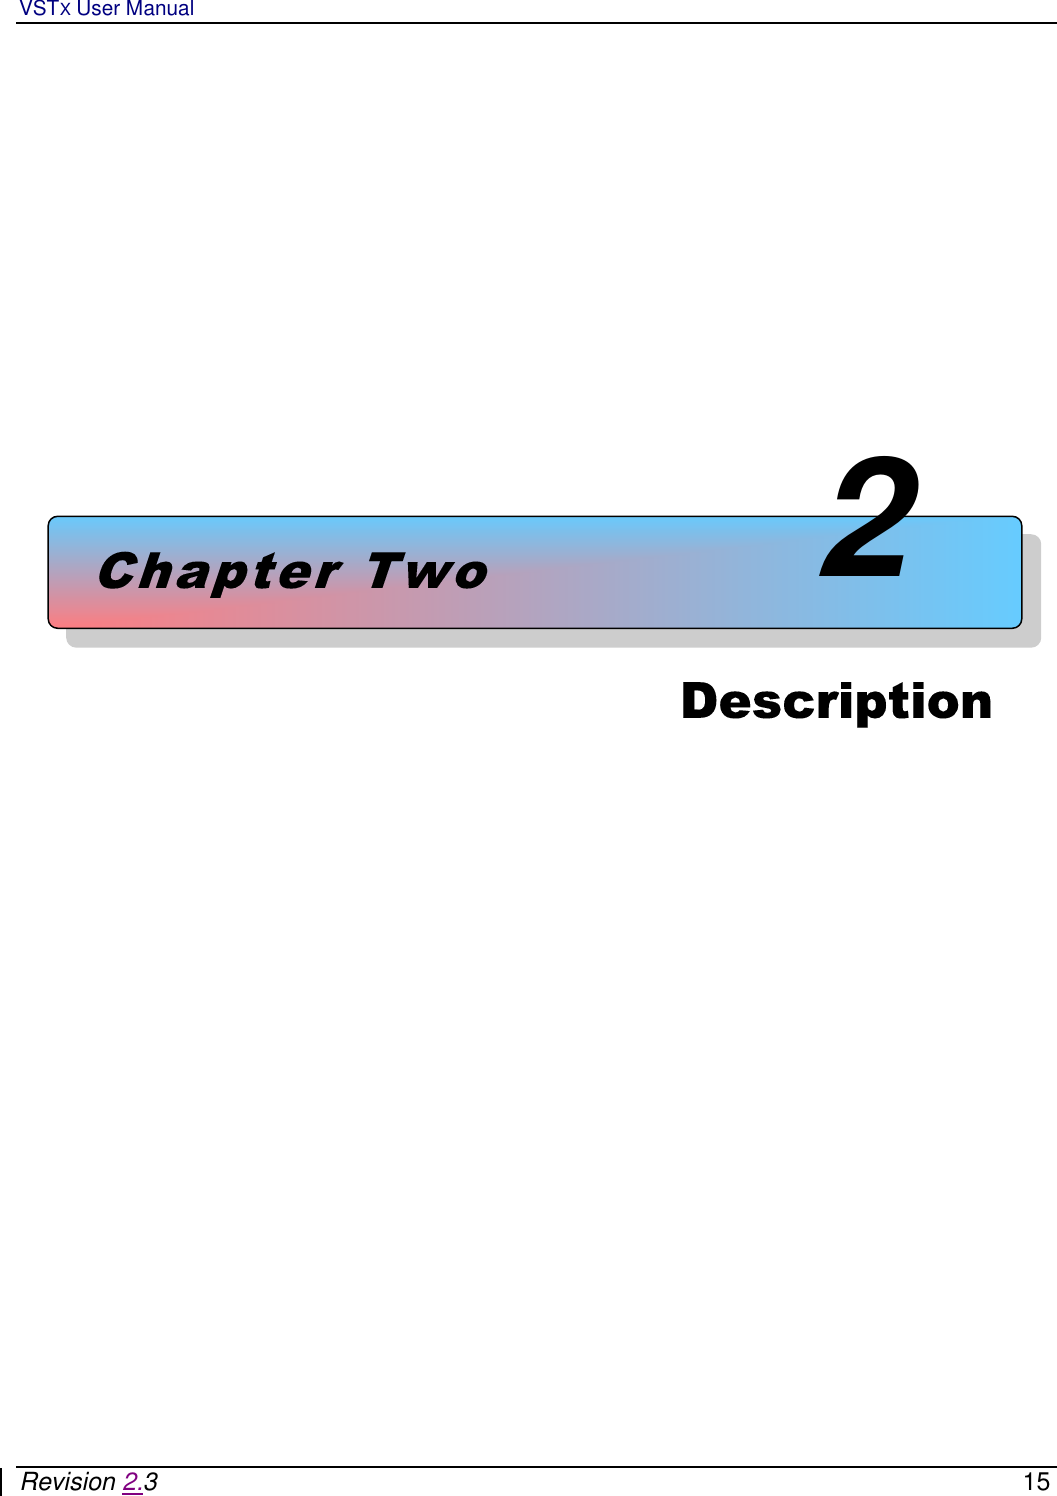 VSTX User Manual   Revision 2.3    15             Chapter Two2Description     